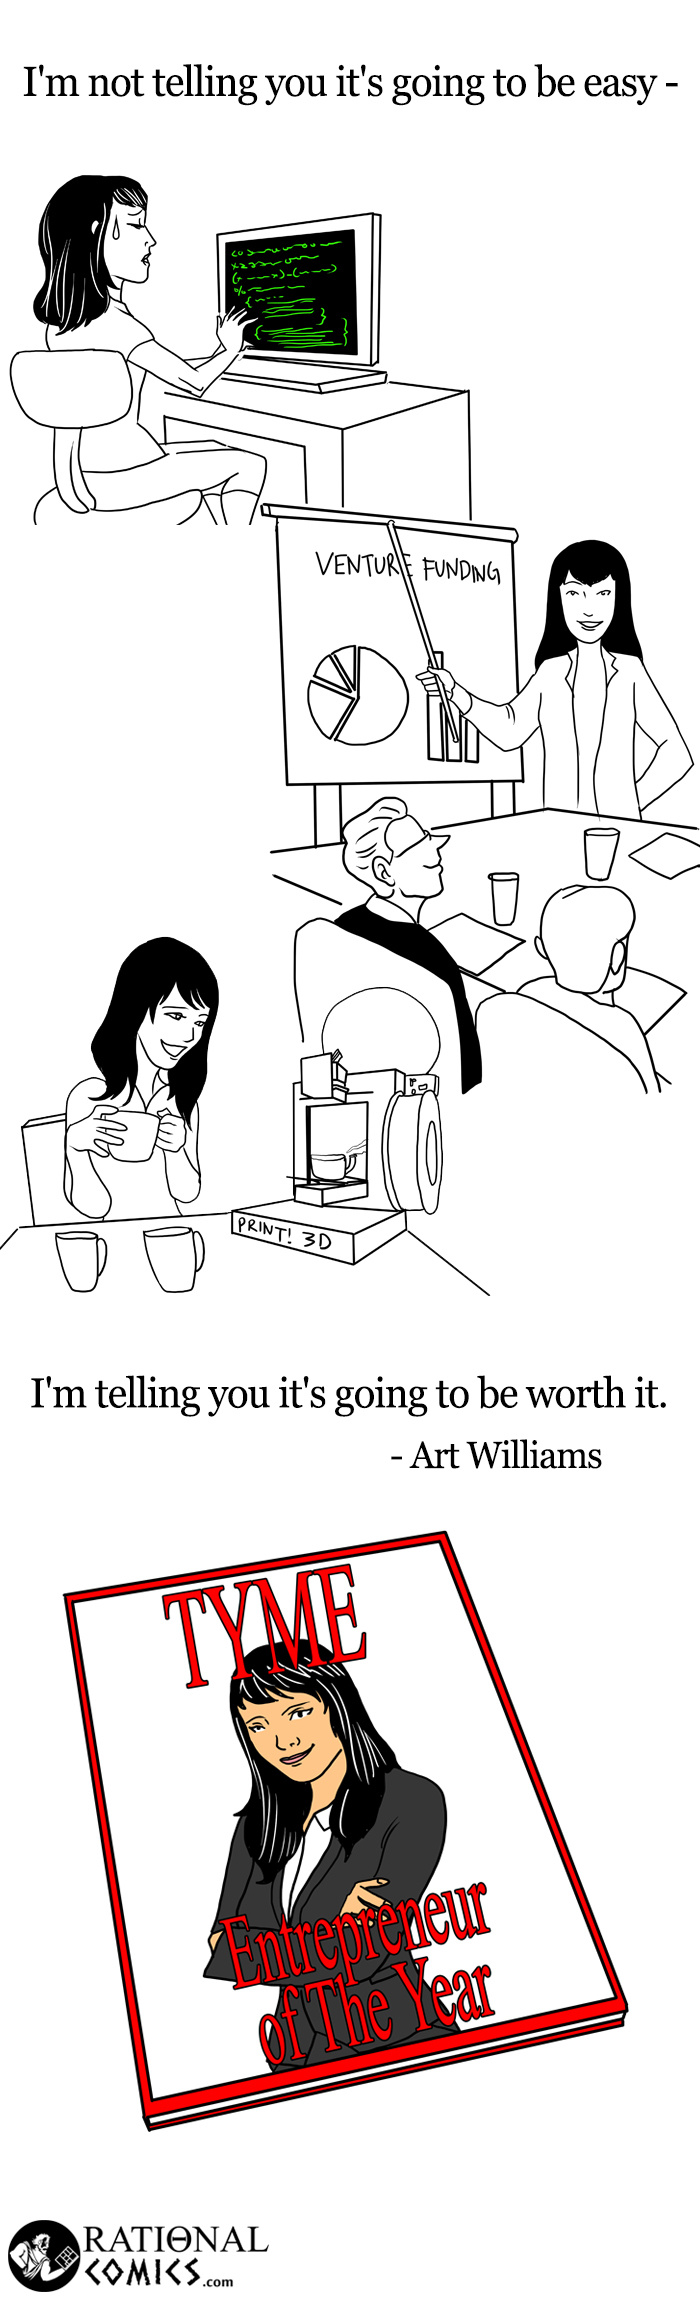 009: Art Williams – I’m Not Telling You